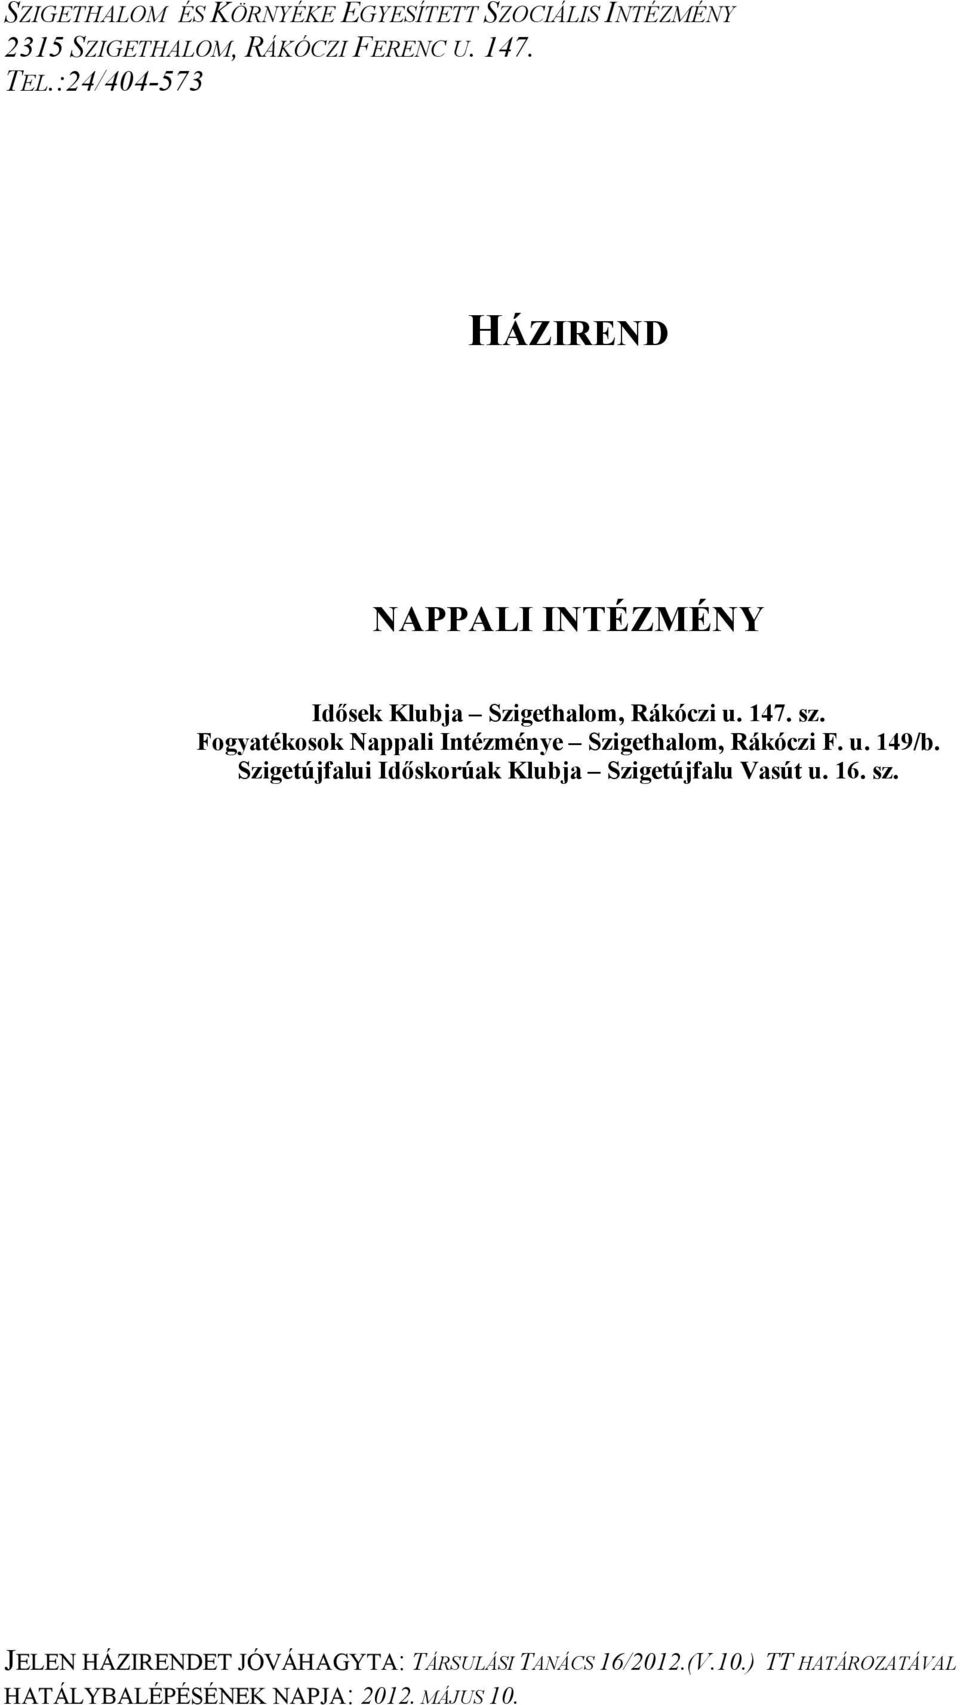 Fogyatékosok Nappali Intézménye Szigethalom, Rákóczi F. u. 149/b.